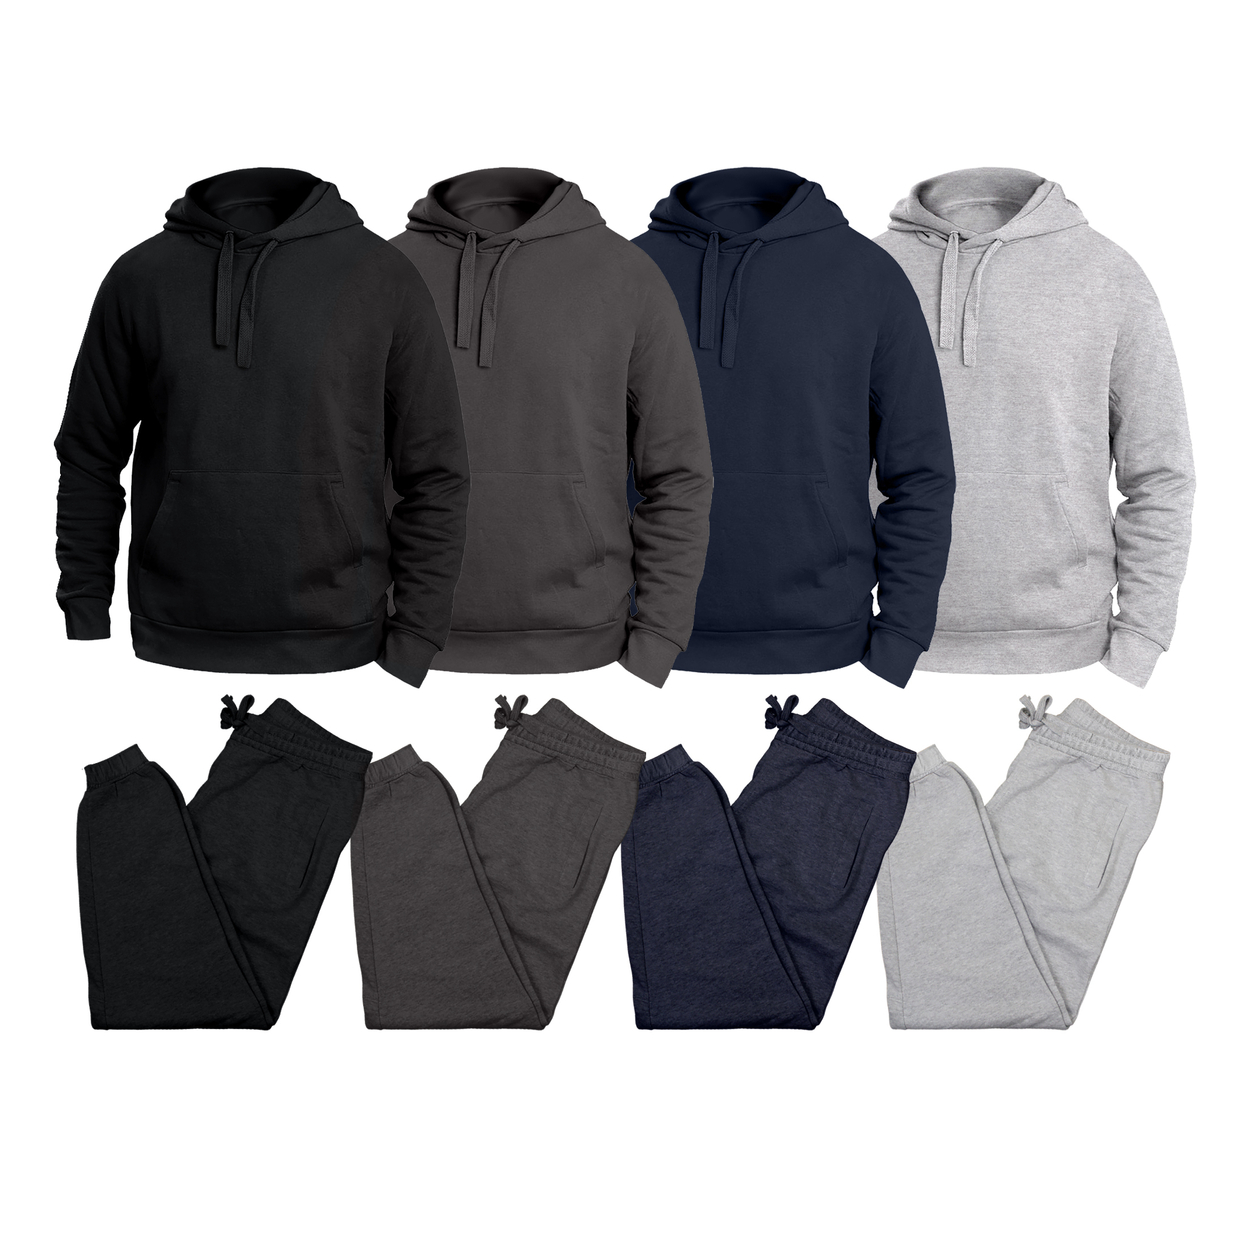 Multi-Pack: Big & Tall Men's Winter Warm Cozy Athletic Fleece Lined Multi-Pocket Cargo Sweatsuit - Grey, 1-pack, Large